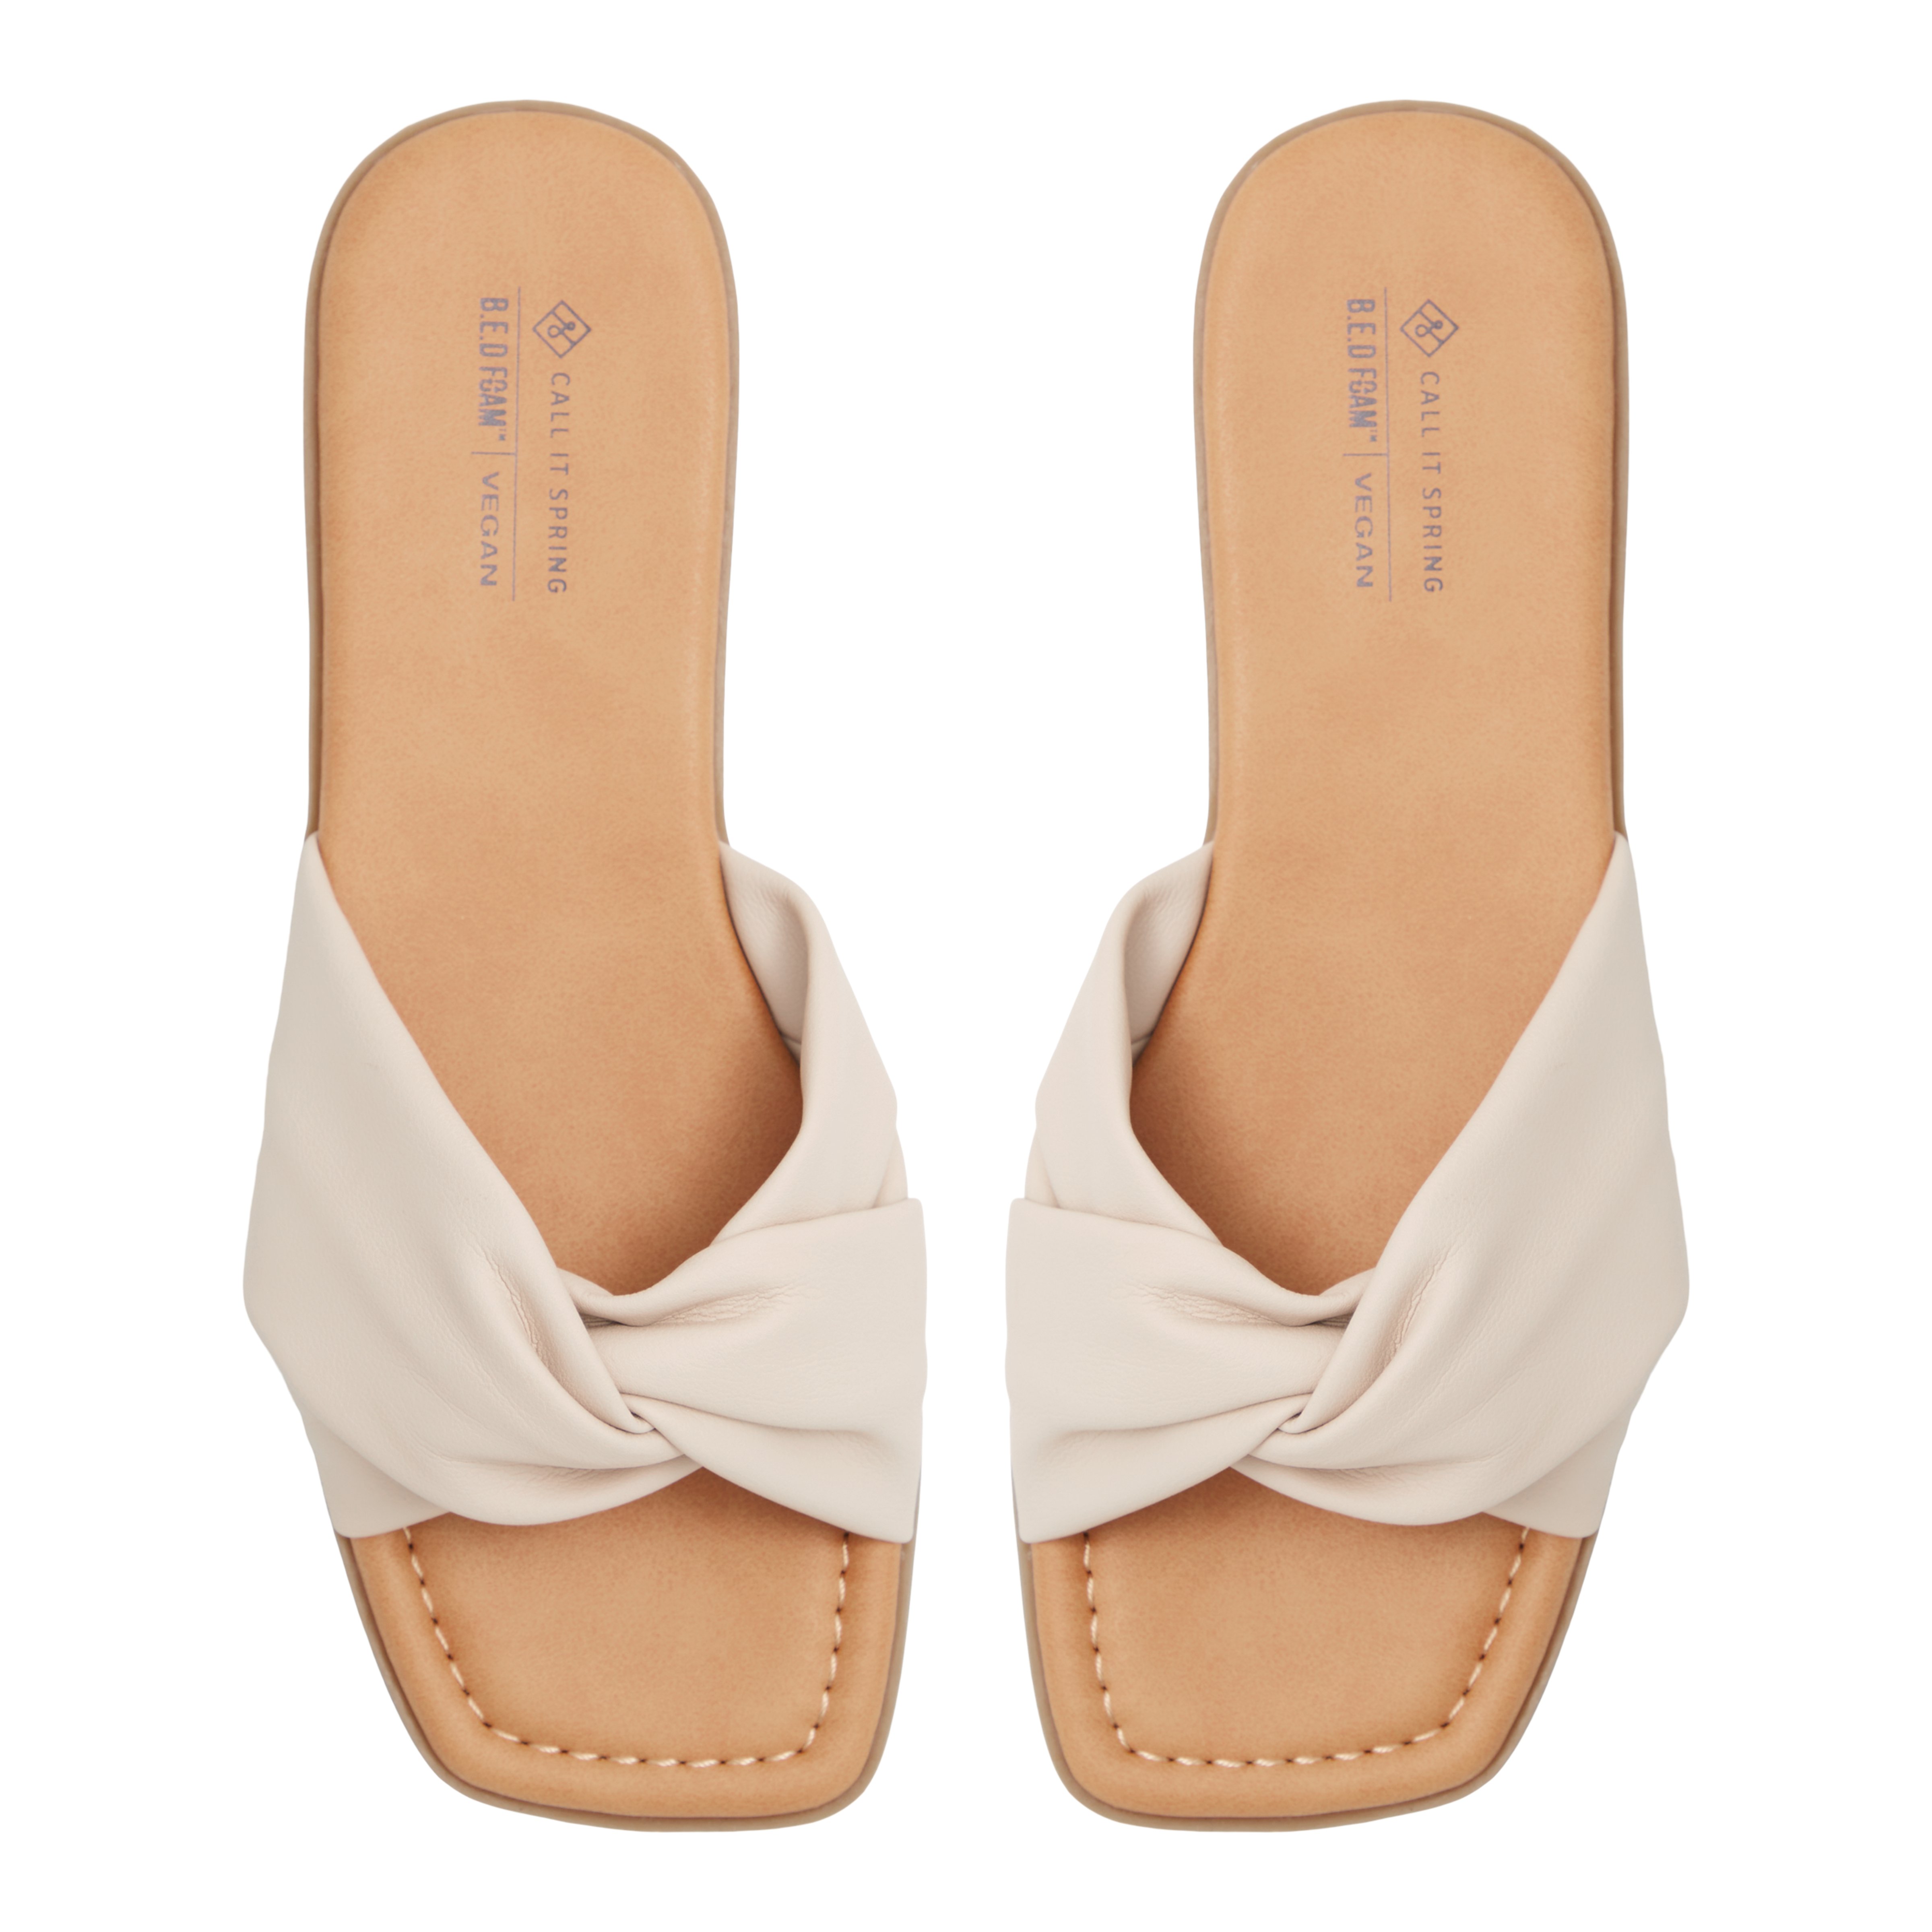 Peaches Women's Beige Flat Sandals